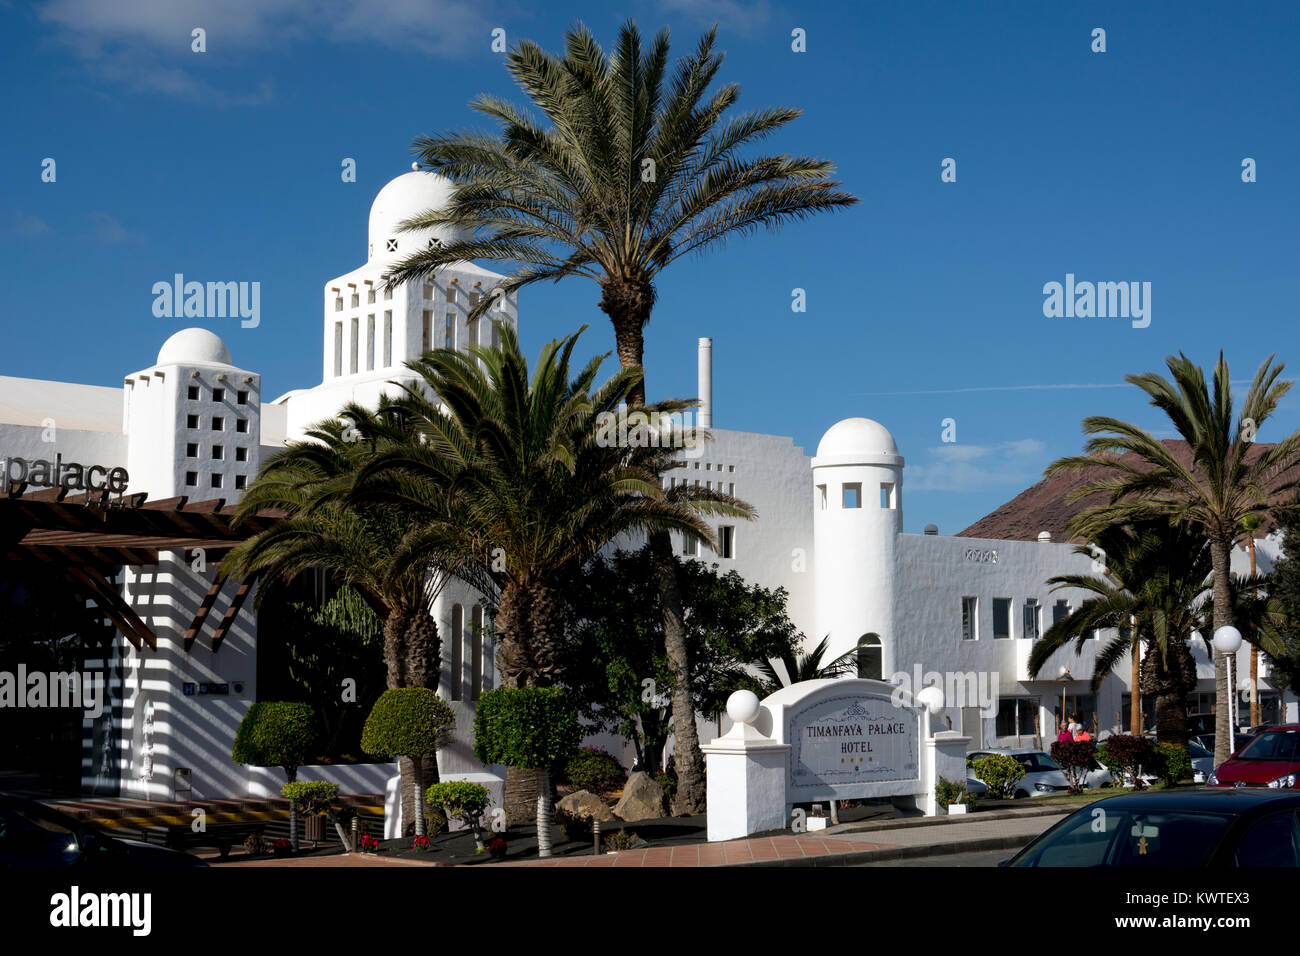 Timanfaya Palace Hotel, Playa Blanca, Lanzarote, Kanarische Inseln, Spanien. Stockfoto